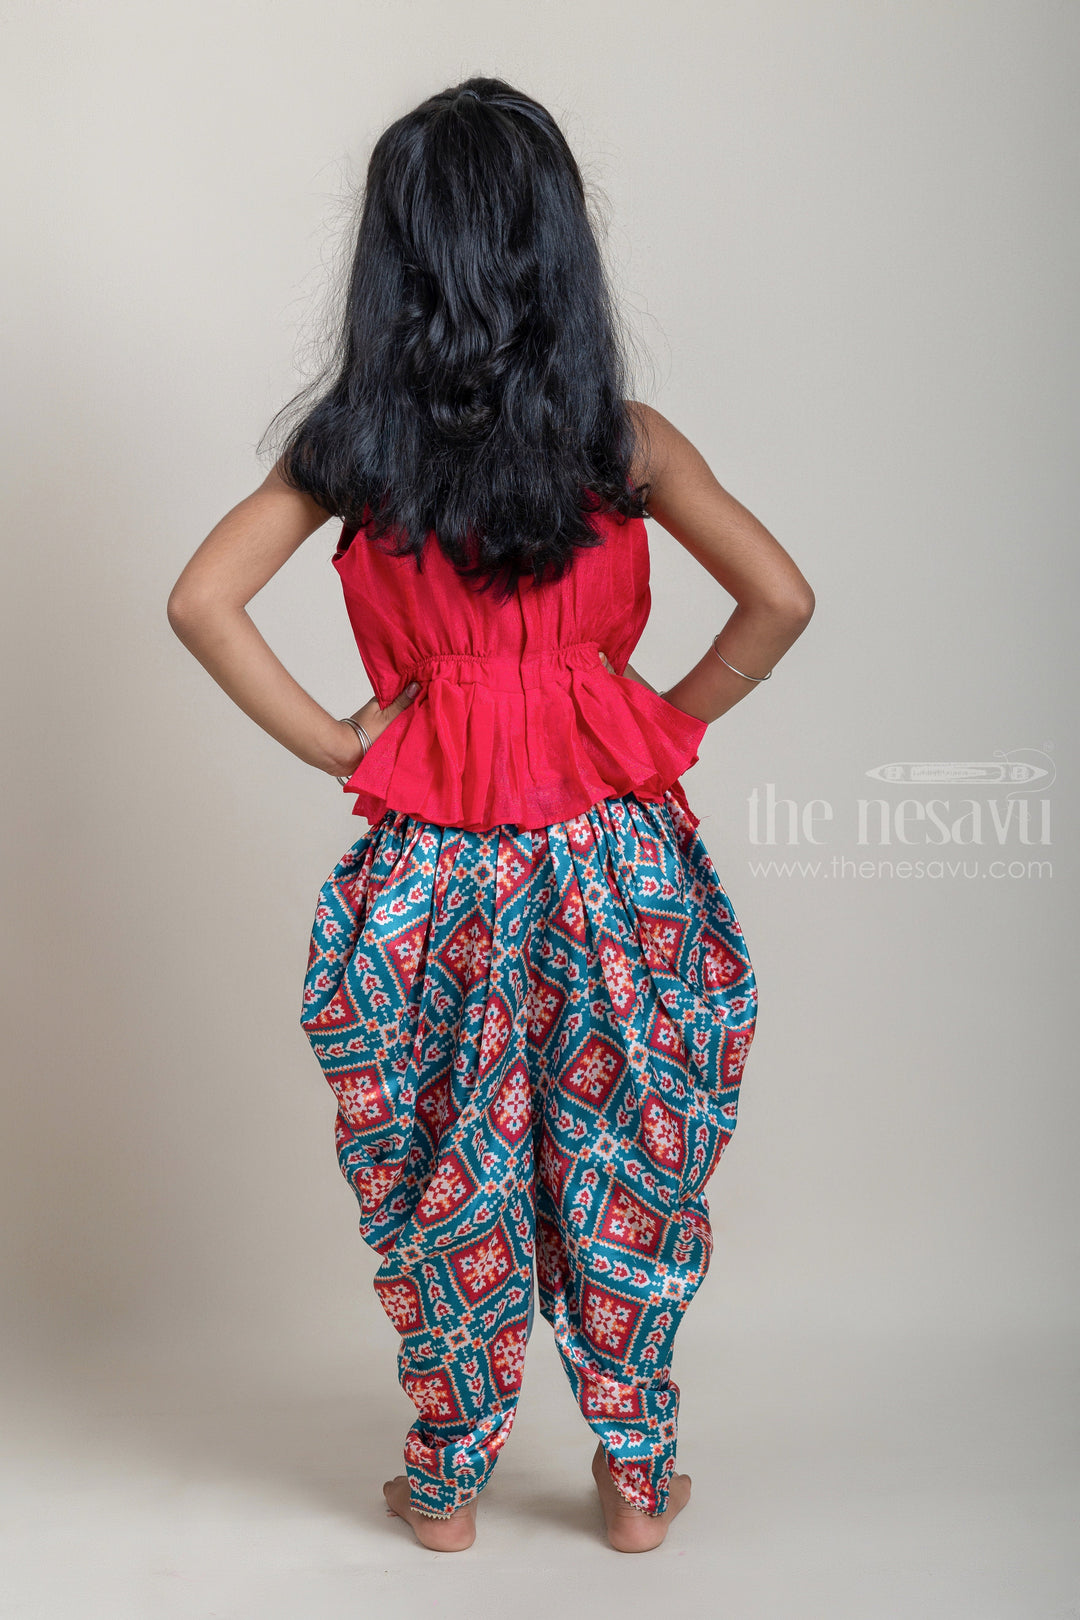 The Nesavu Sets & Suits Pleated Peplum Pattern Red Top and Ikat Printed Green Pyjama Pant for Girls with Organza Dupatta psr silks Nesavu